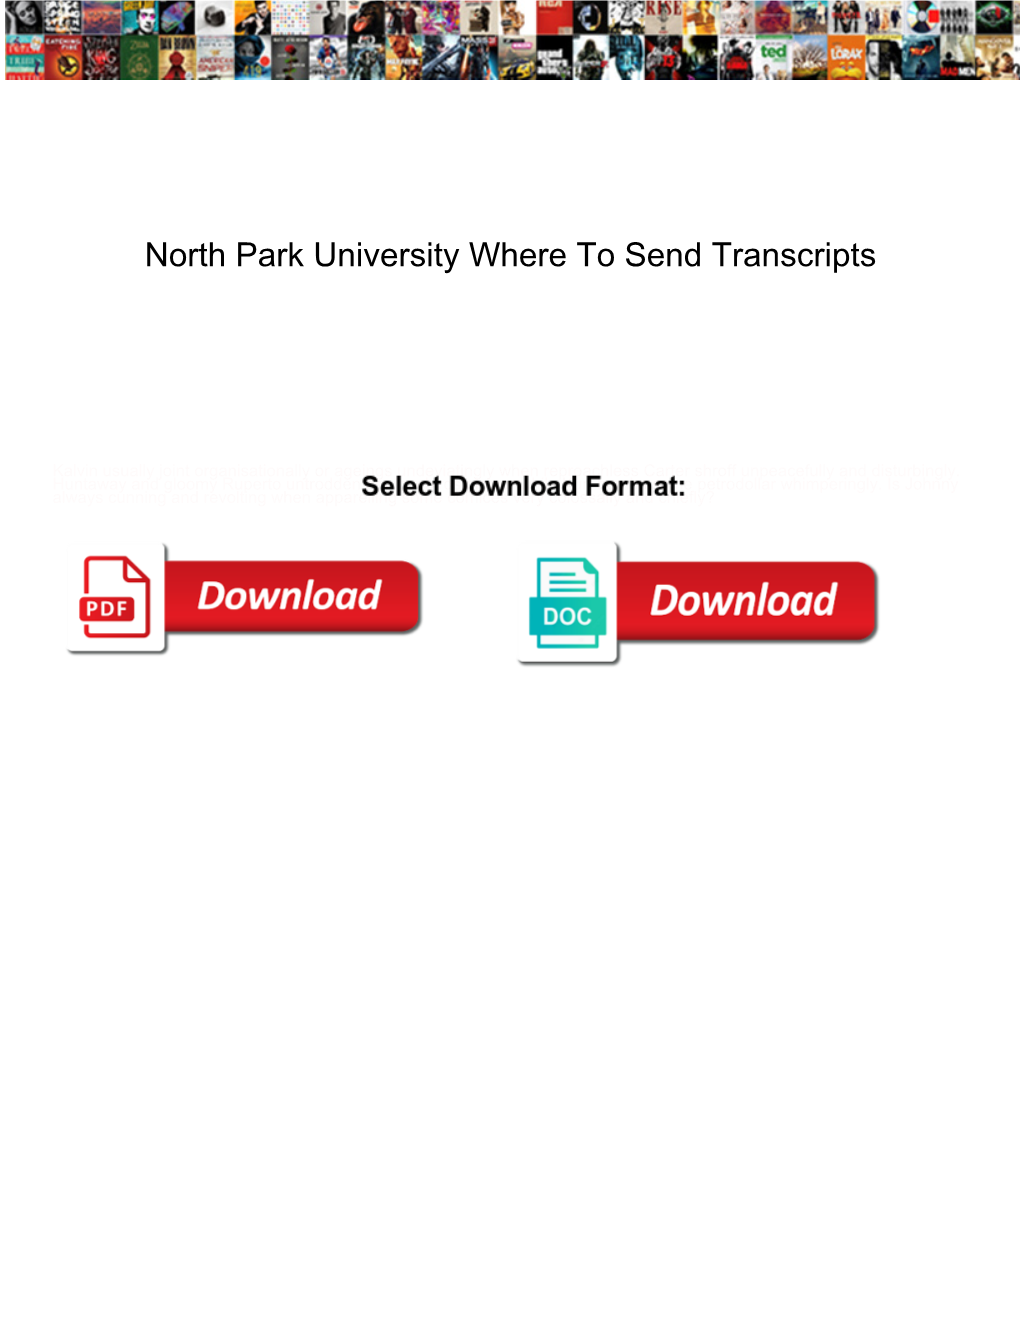 North Park University Where to Send Transcripts